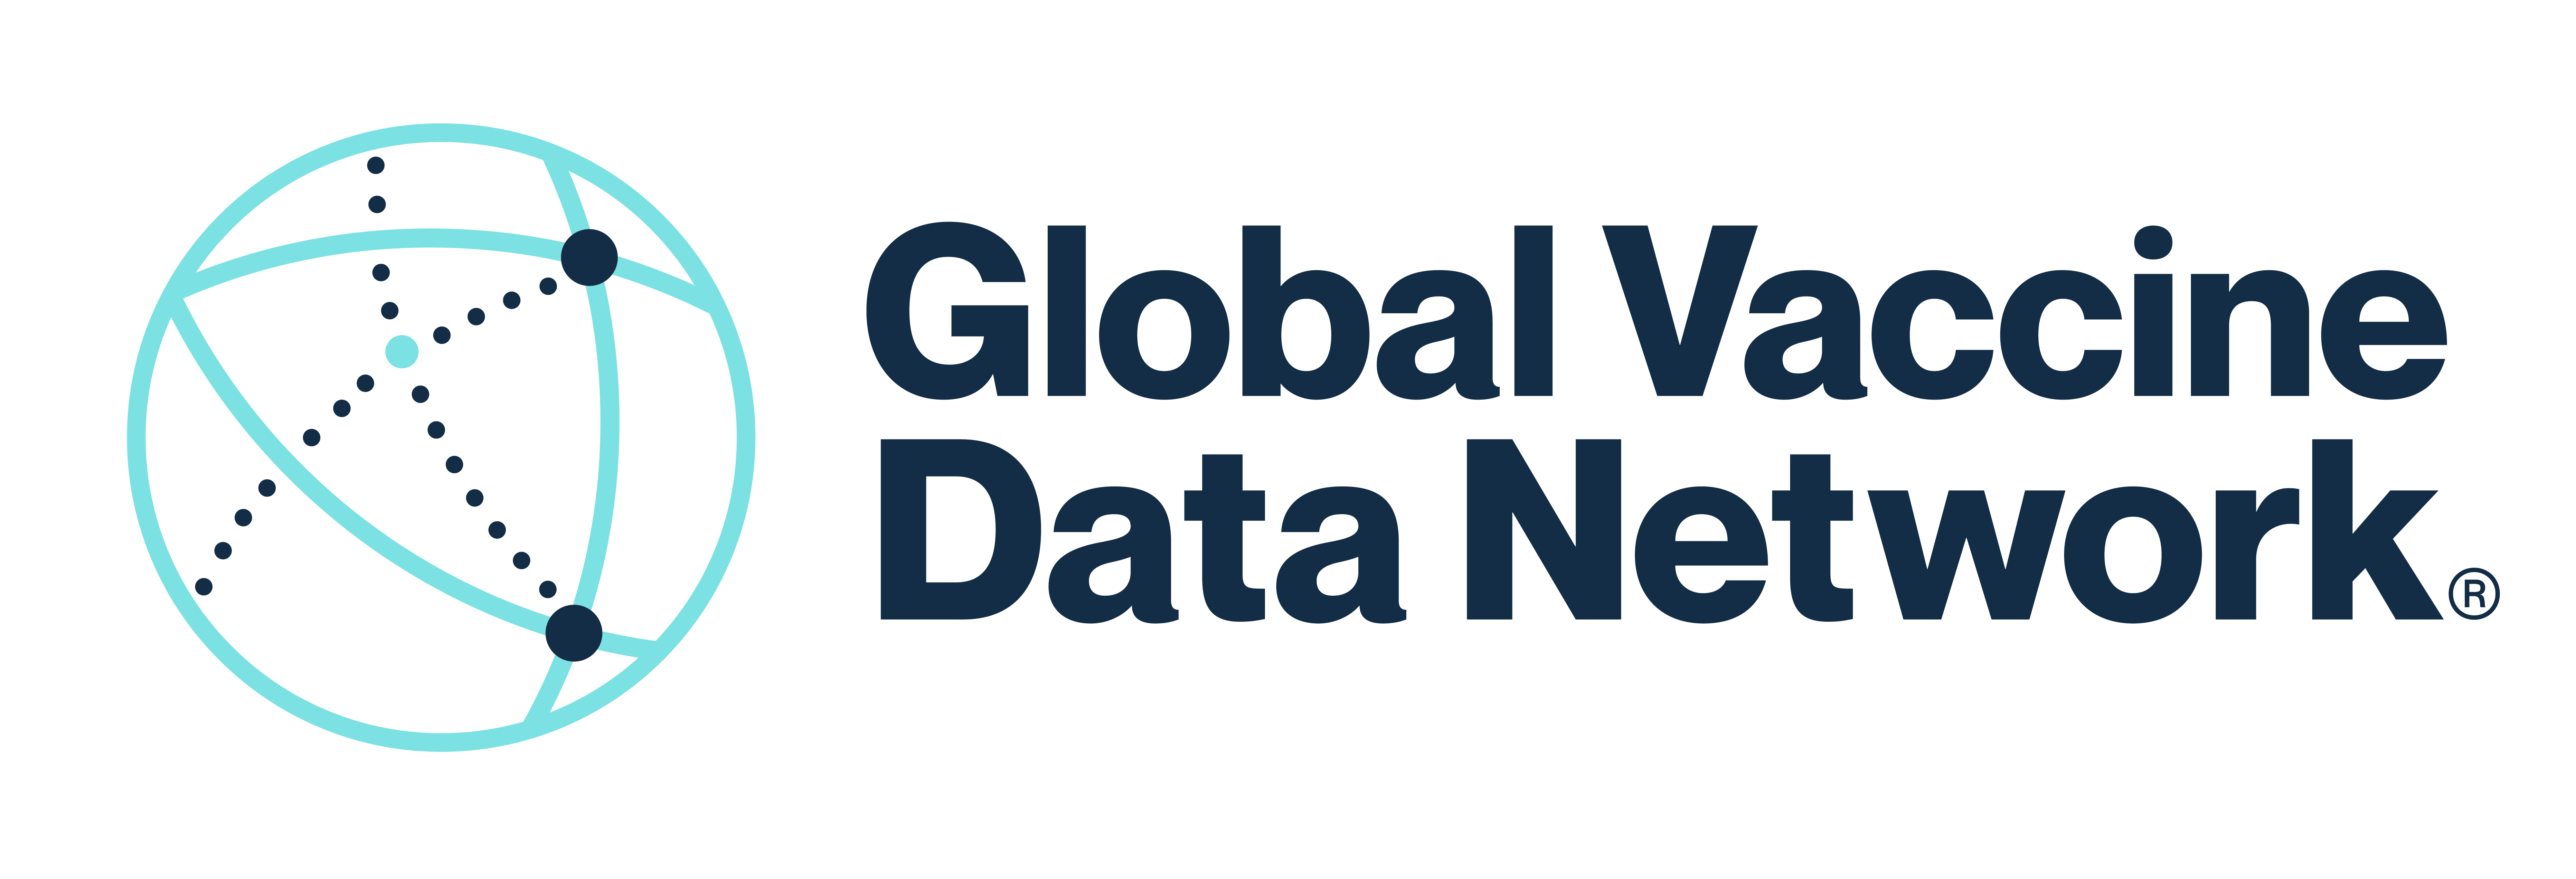 Global Vaccine Data Network Logo